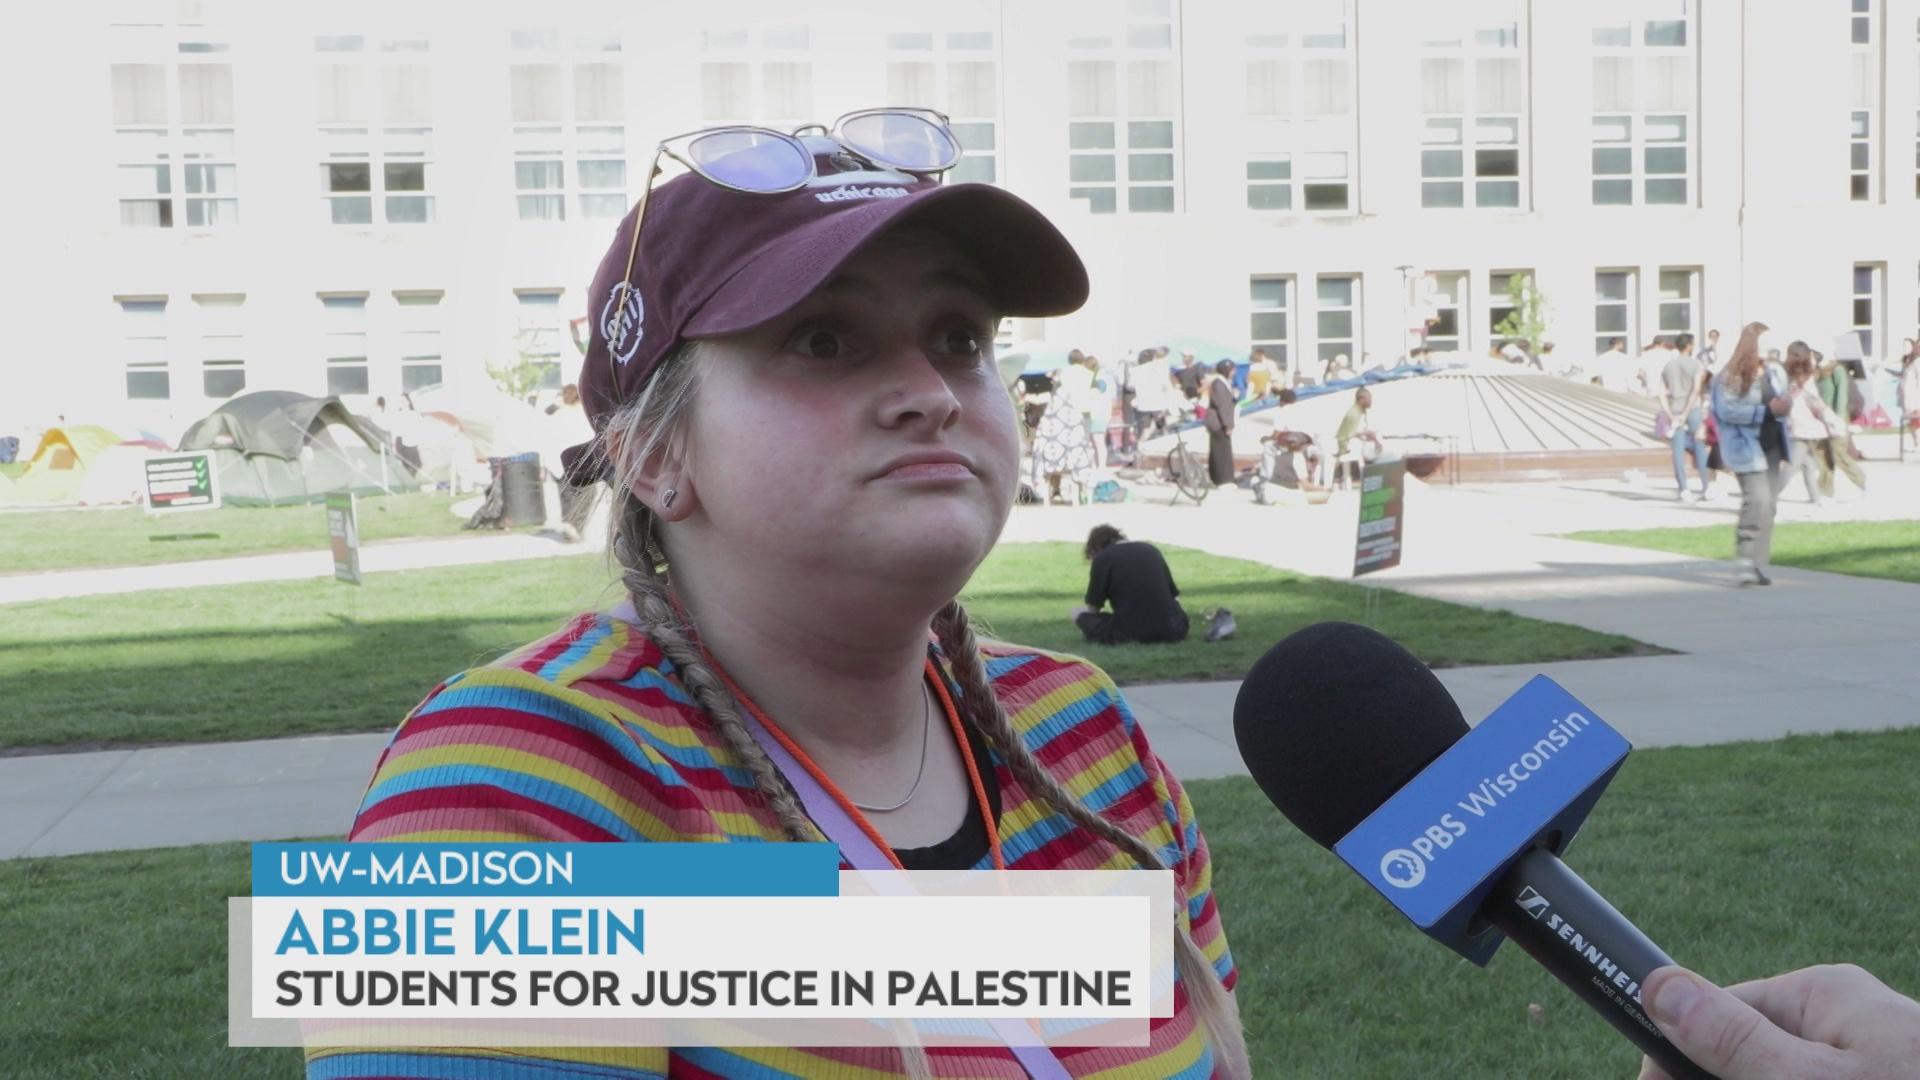 Abbie Klein on Gaza protesters negotiating with UW-Madison